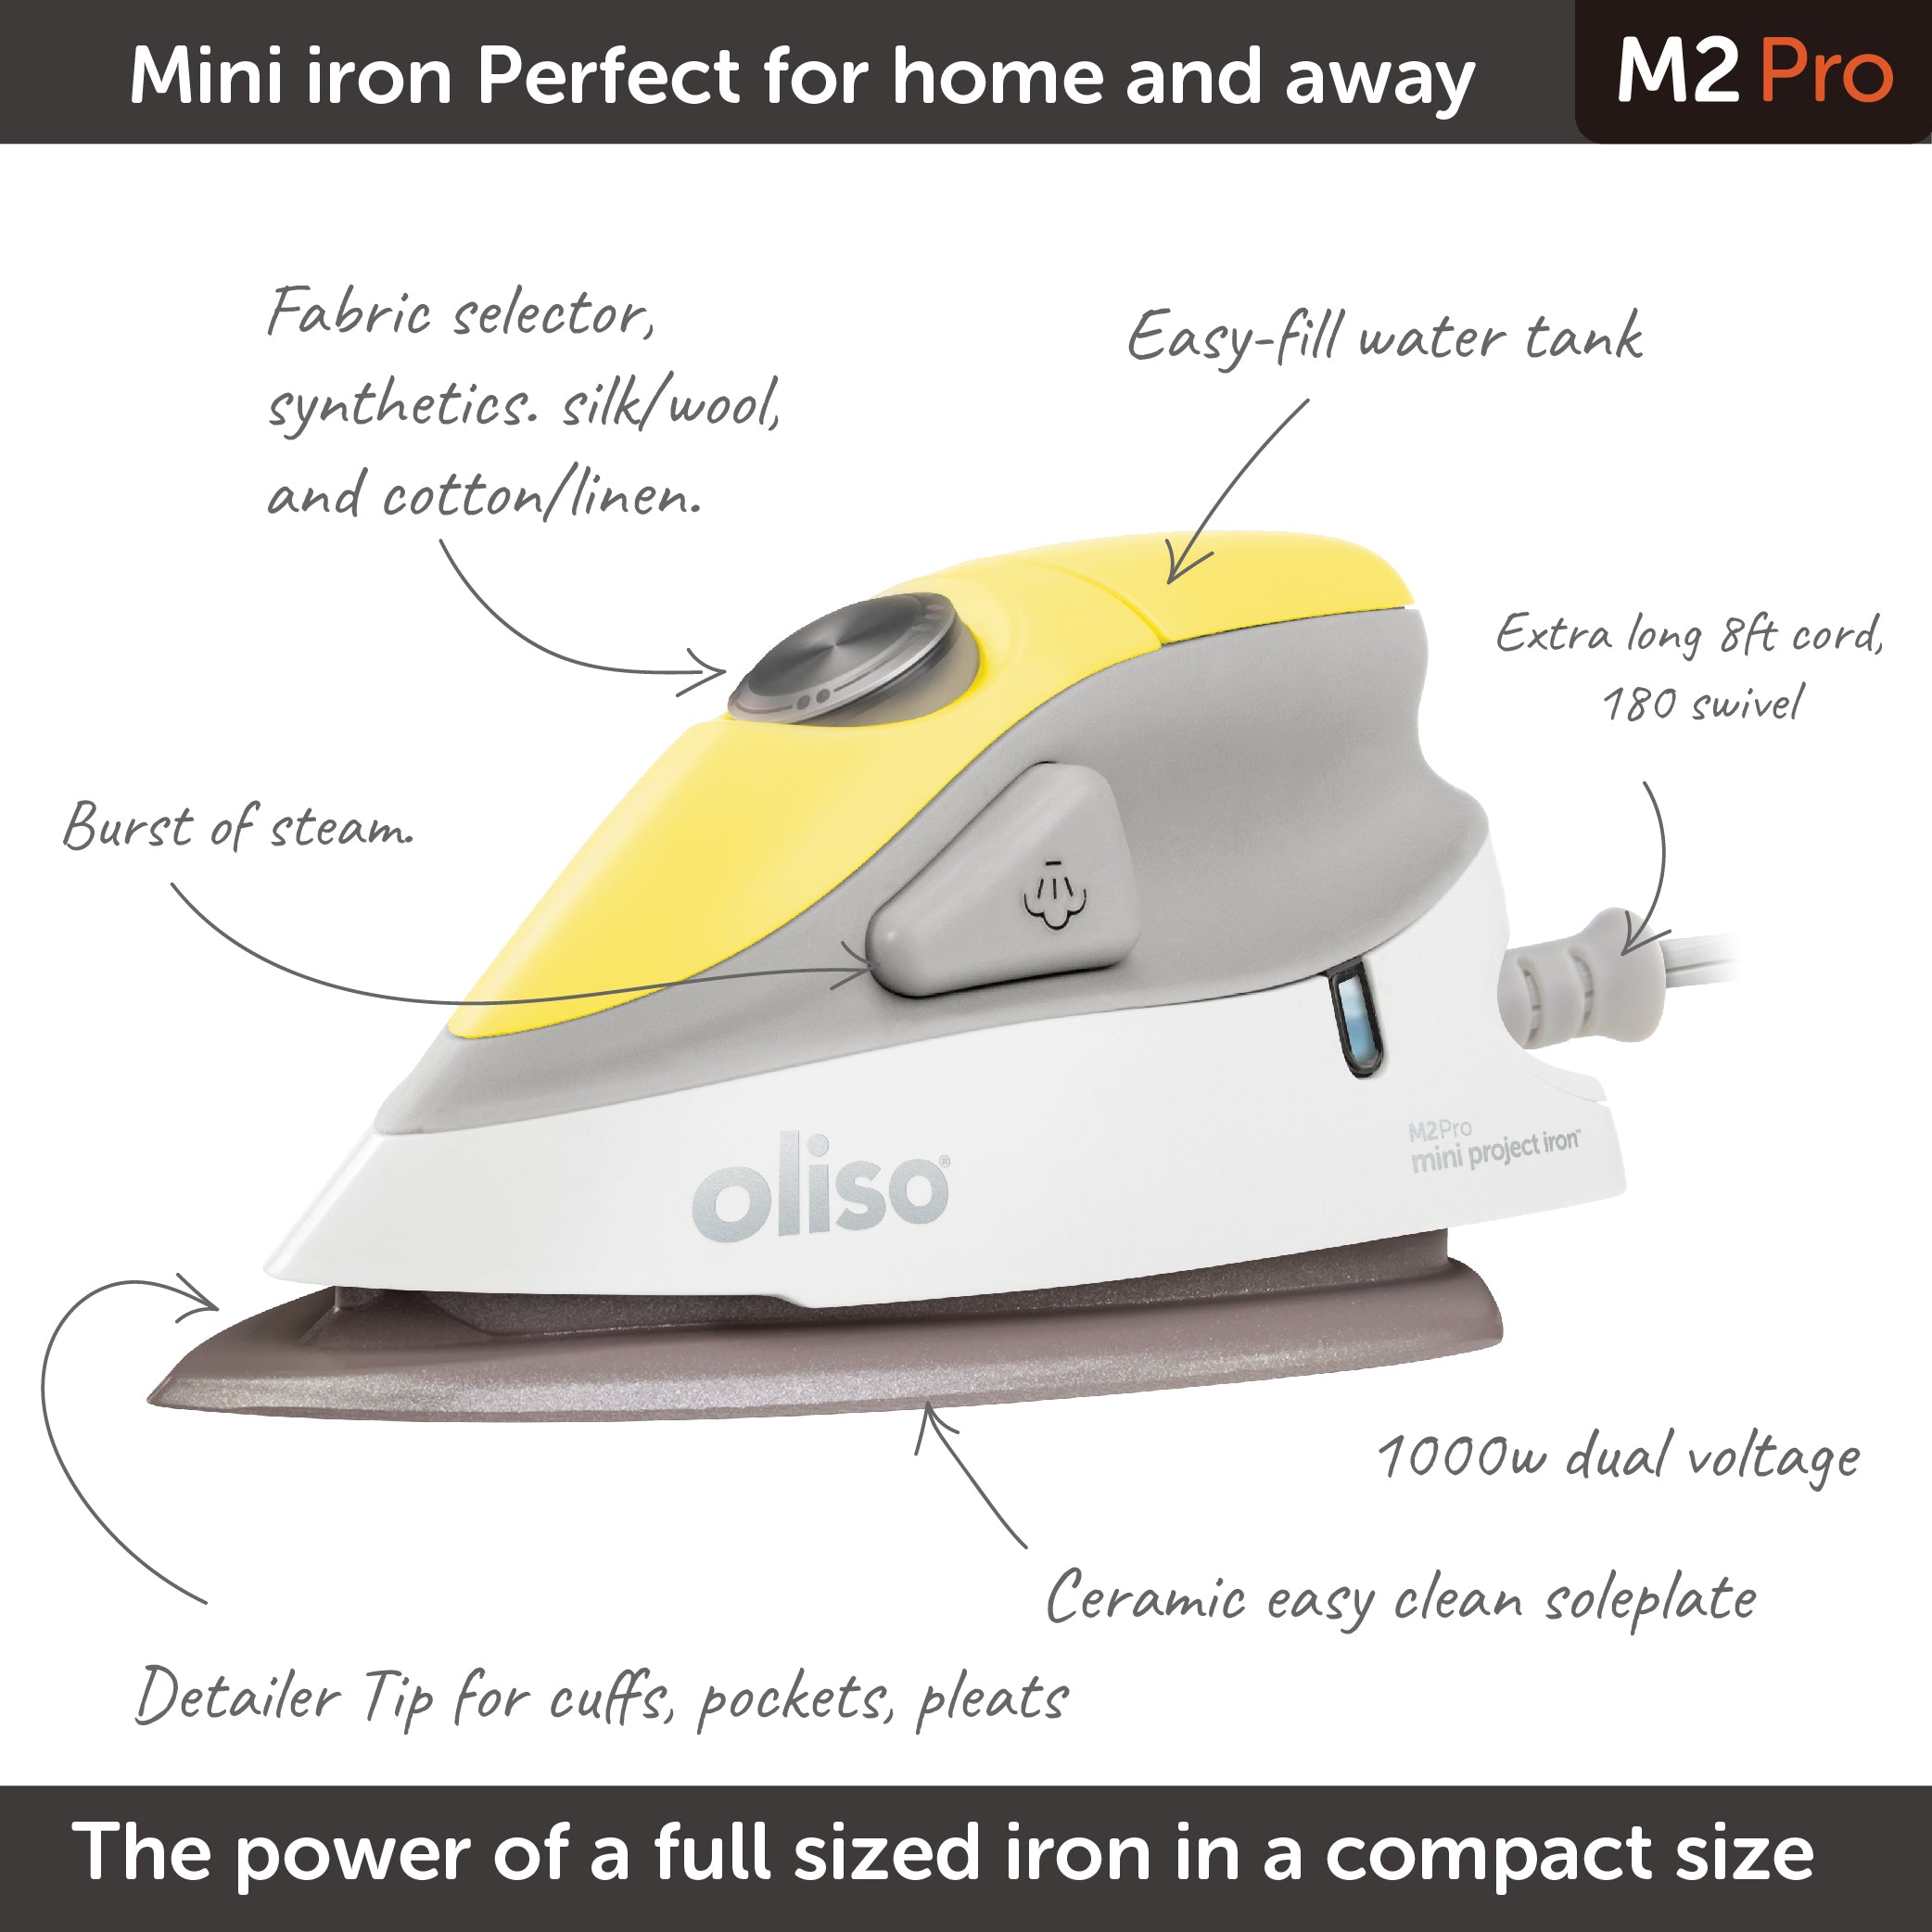 Mini Oliso Iron Review / Pros and Cons of the Oliso Mini Iron 